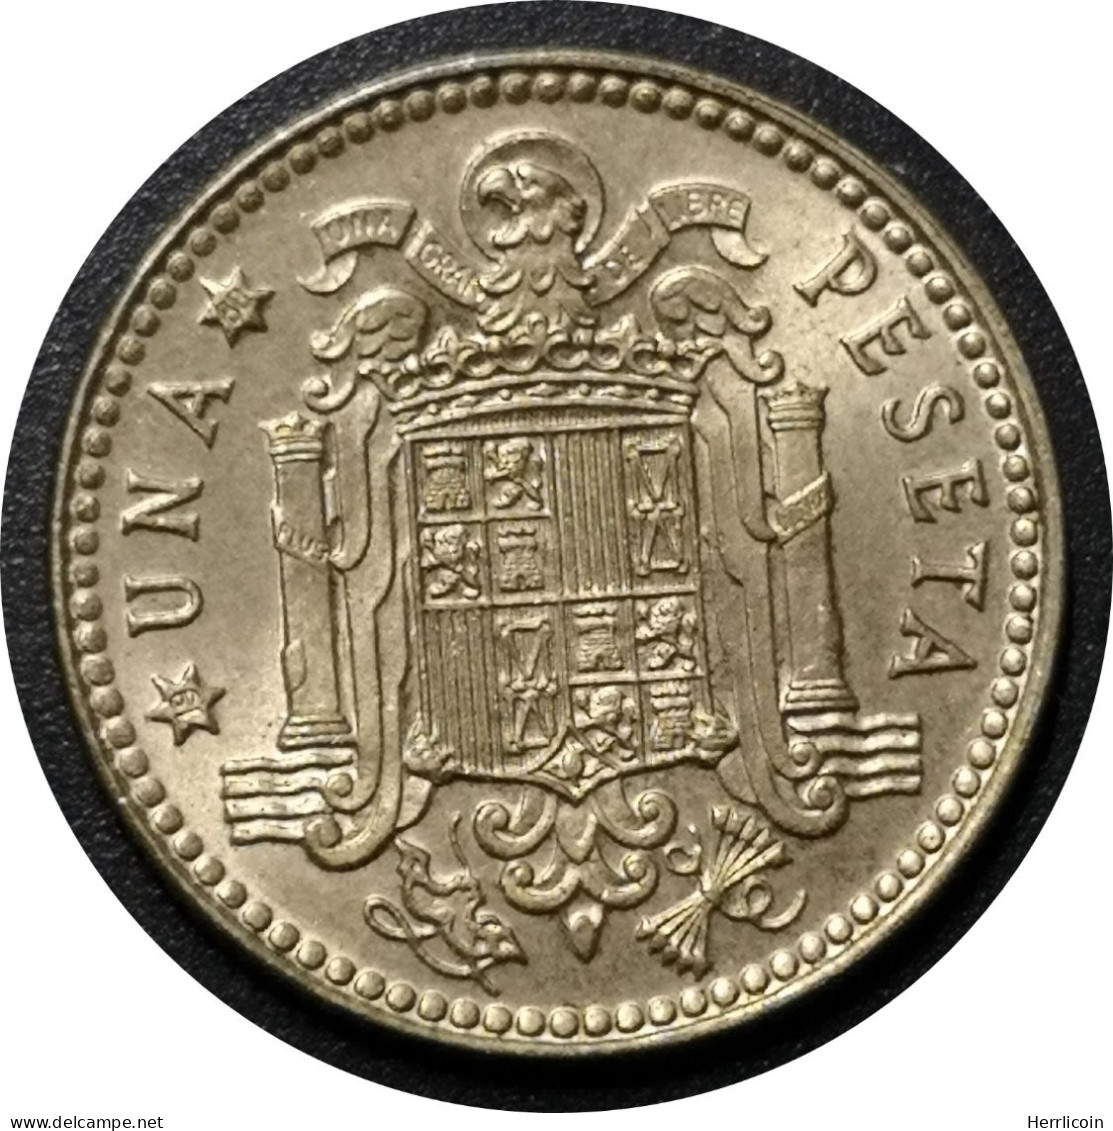 Monnaie Espagne - 1975 (1980) - 1 Peseta Juan Carlos I - 1 Peseta